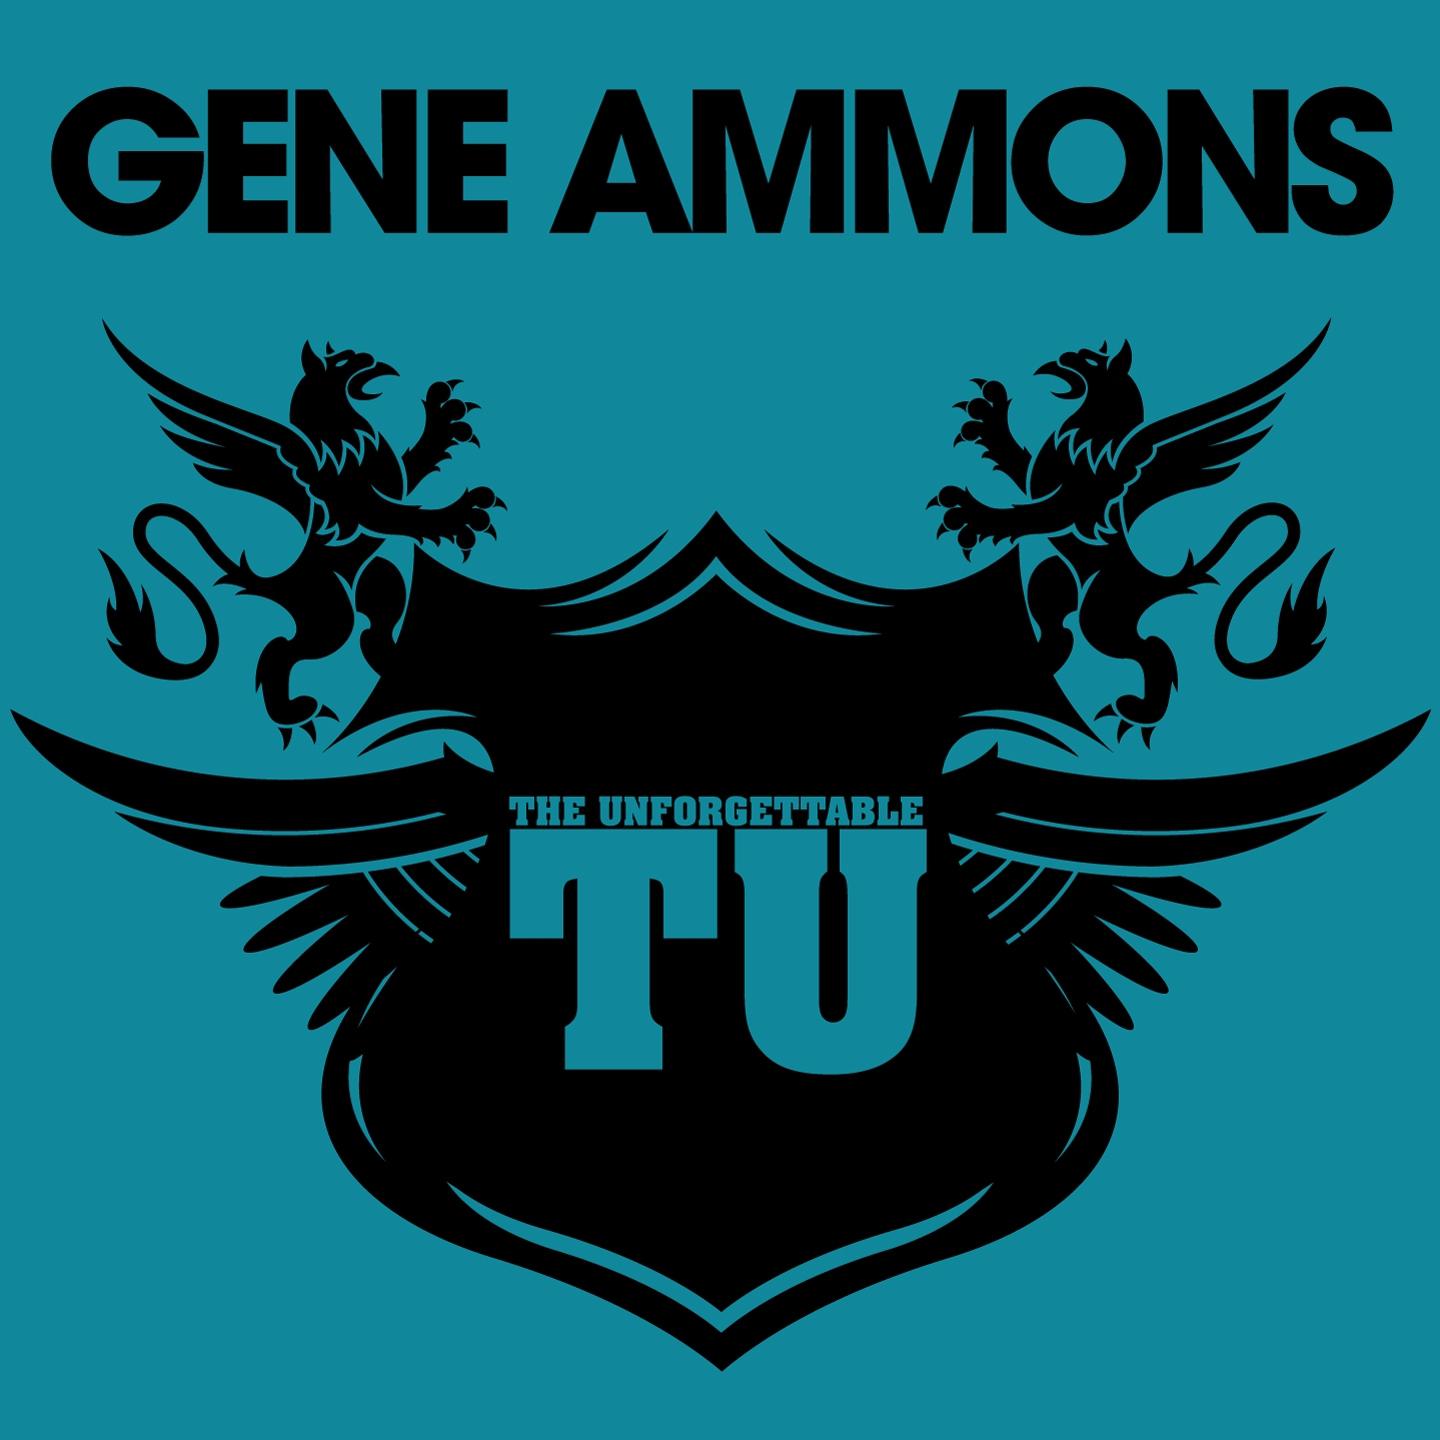 The Unforgettable Gene Ammons